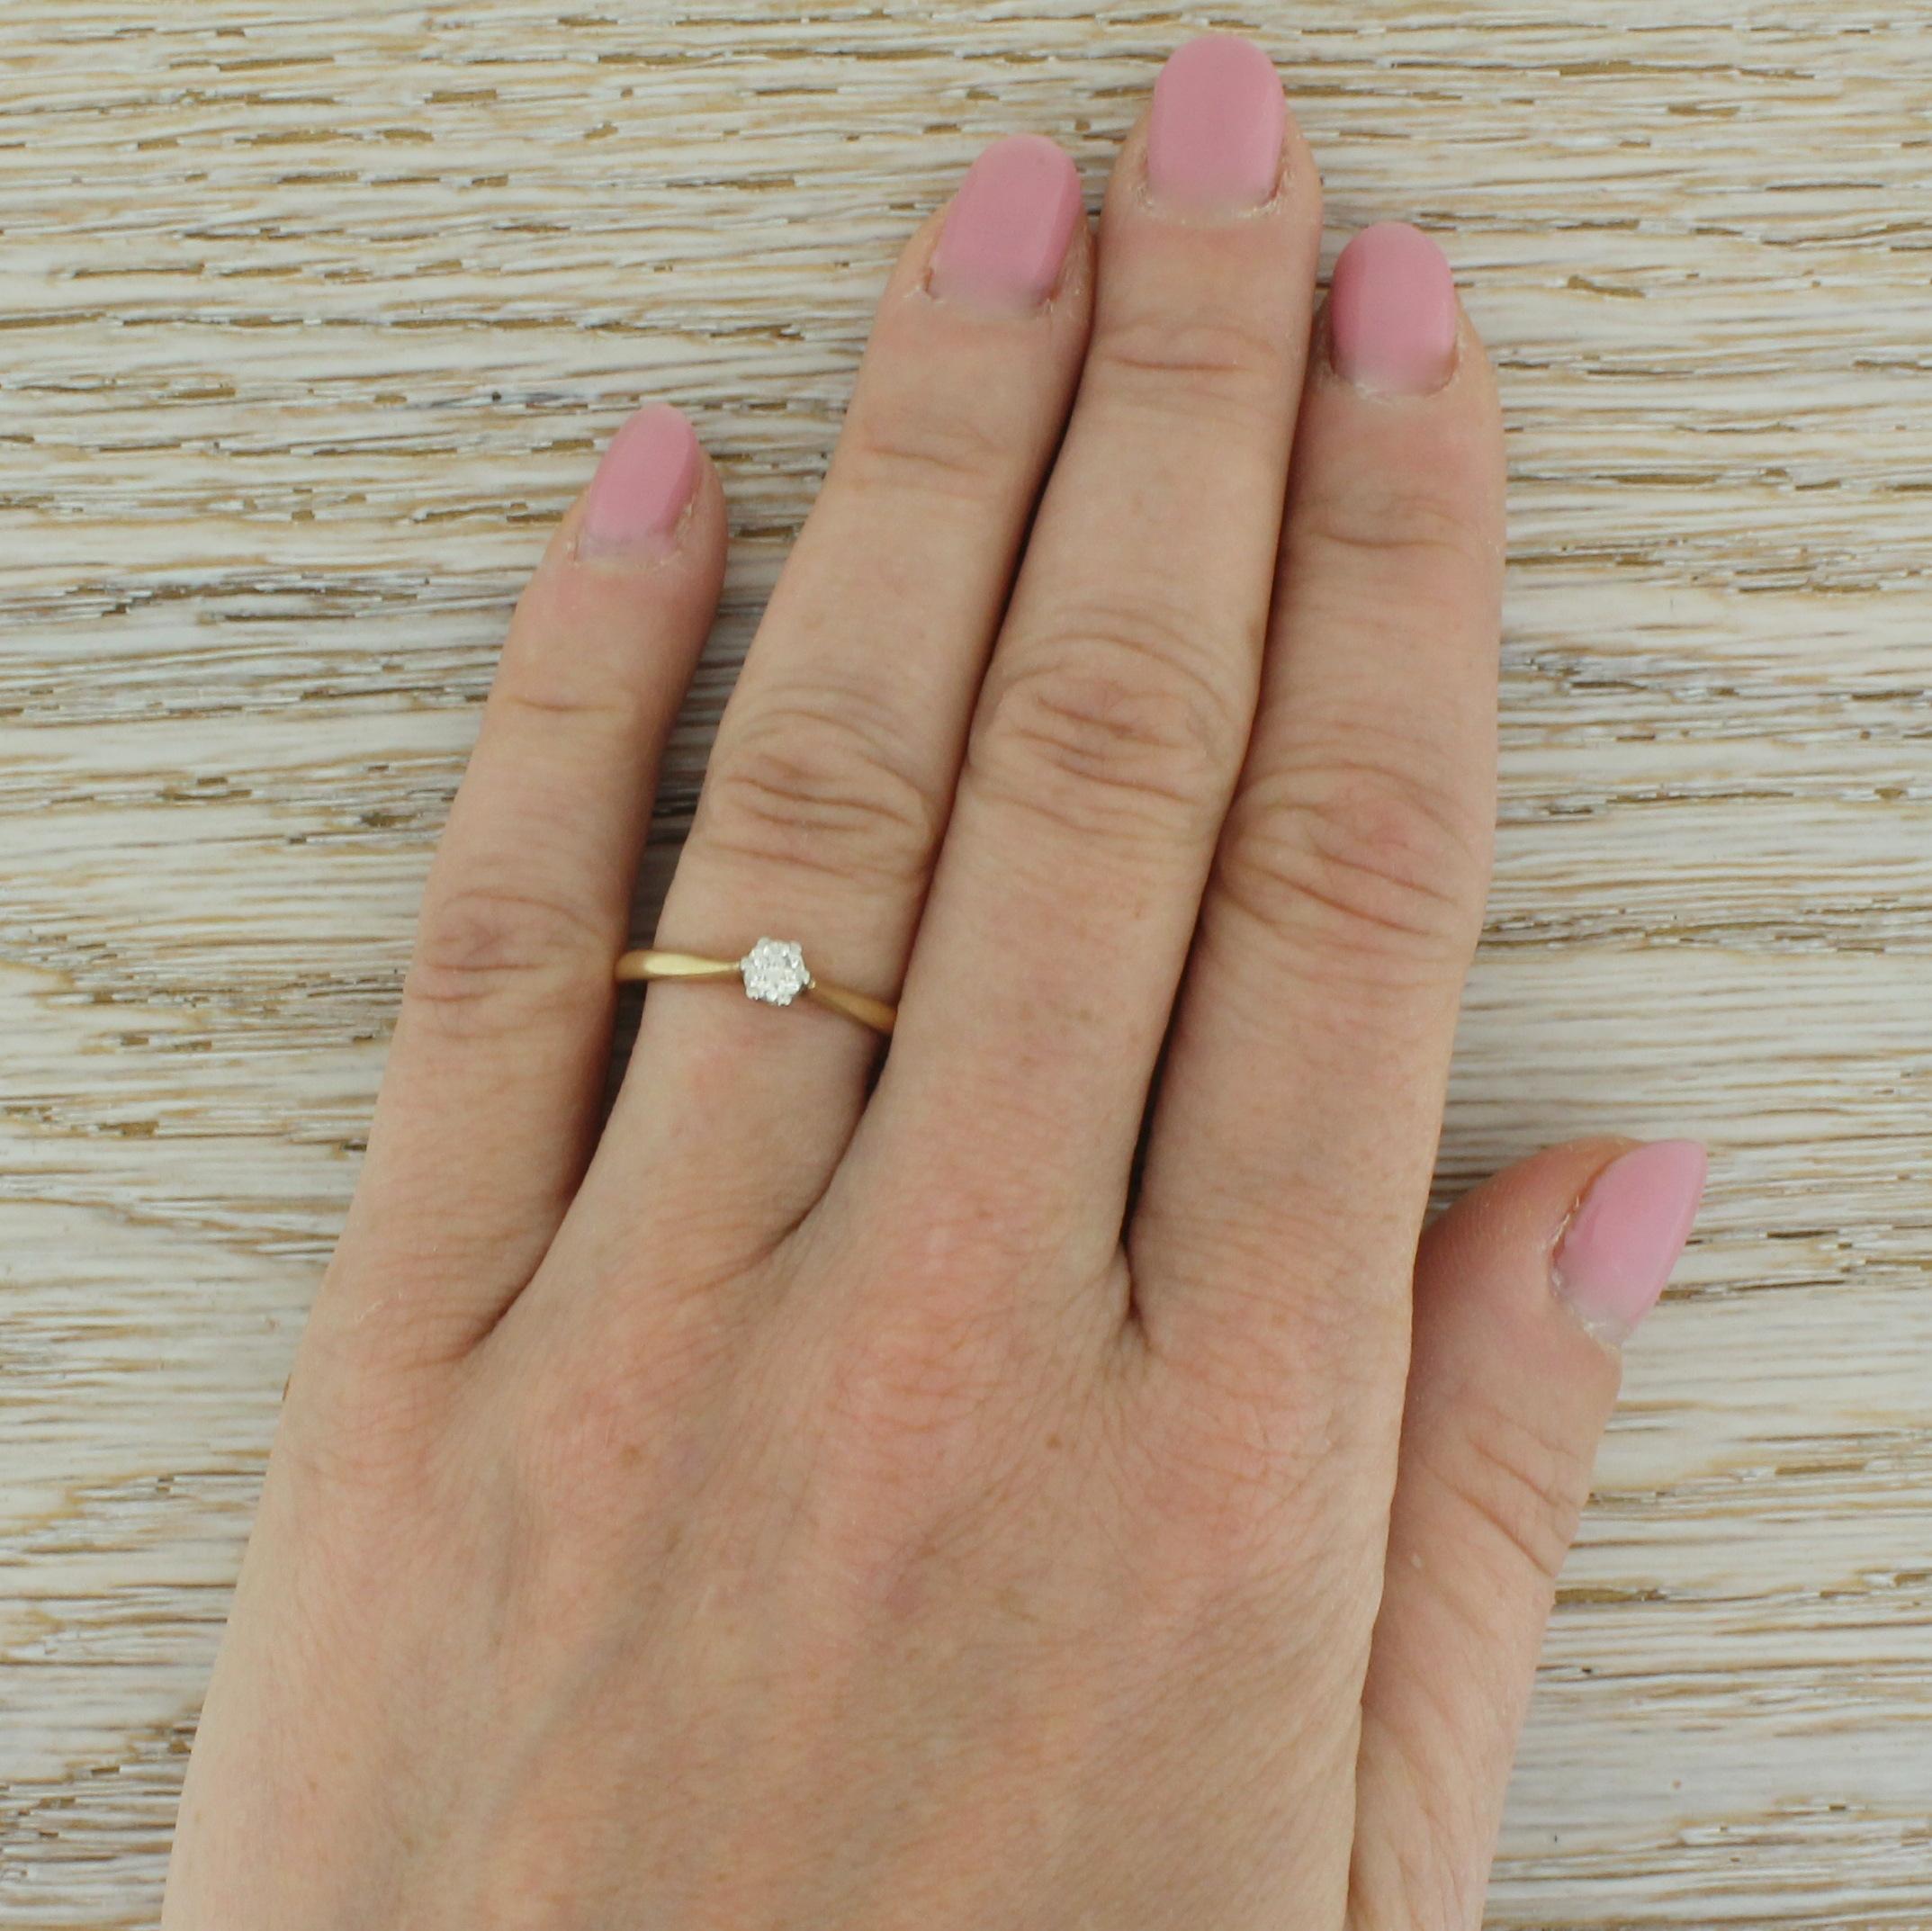 Women's Late 20th Century 0.20 Carat Round Brilliant Cut Diamond Engagement Ring